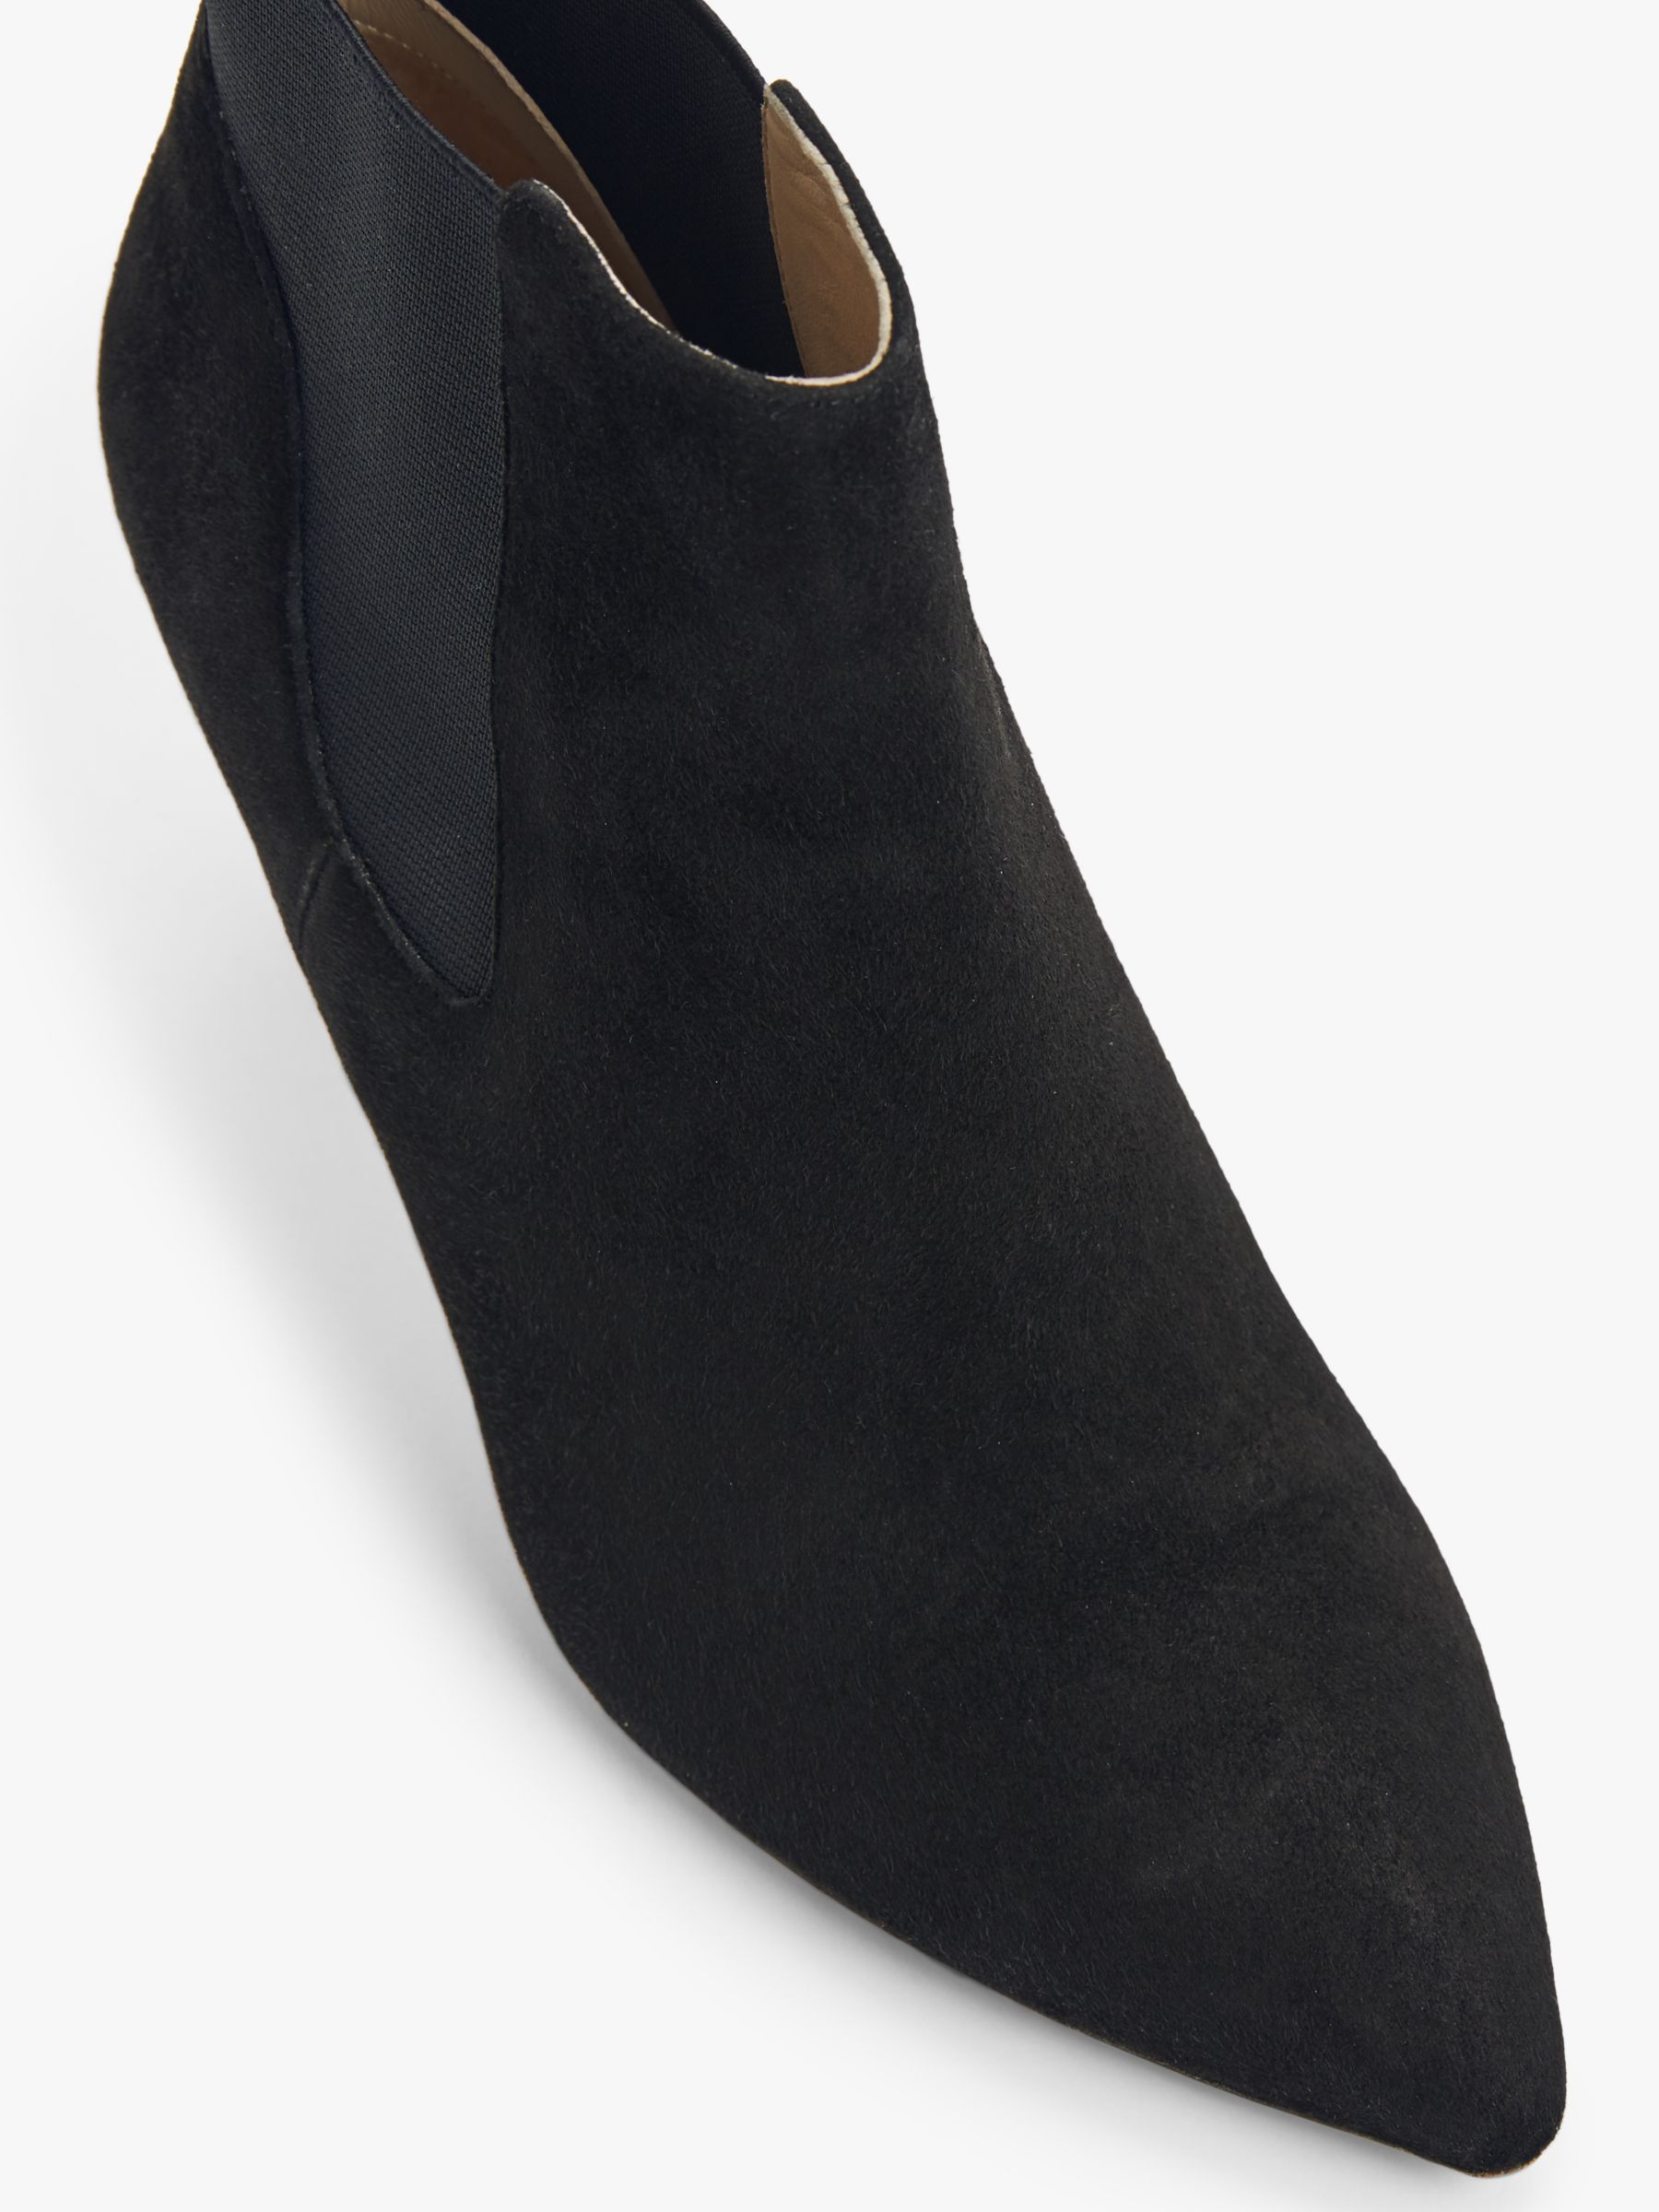 Buy Boden Elsworth Pointed Toe Ankle Boots, Black Online at johnlewis.com